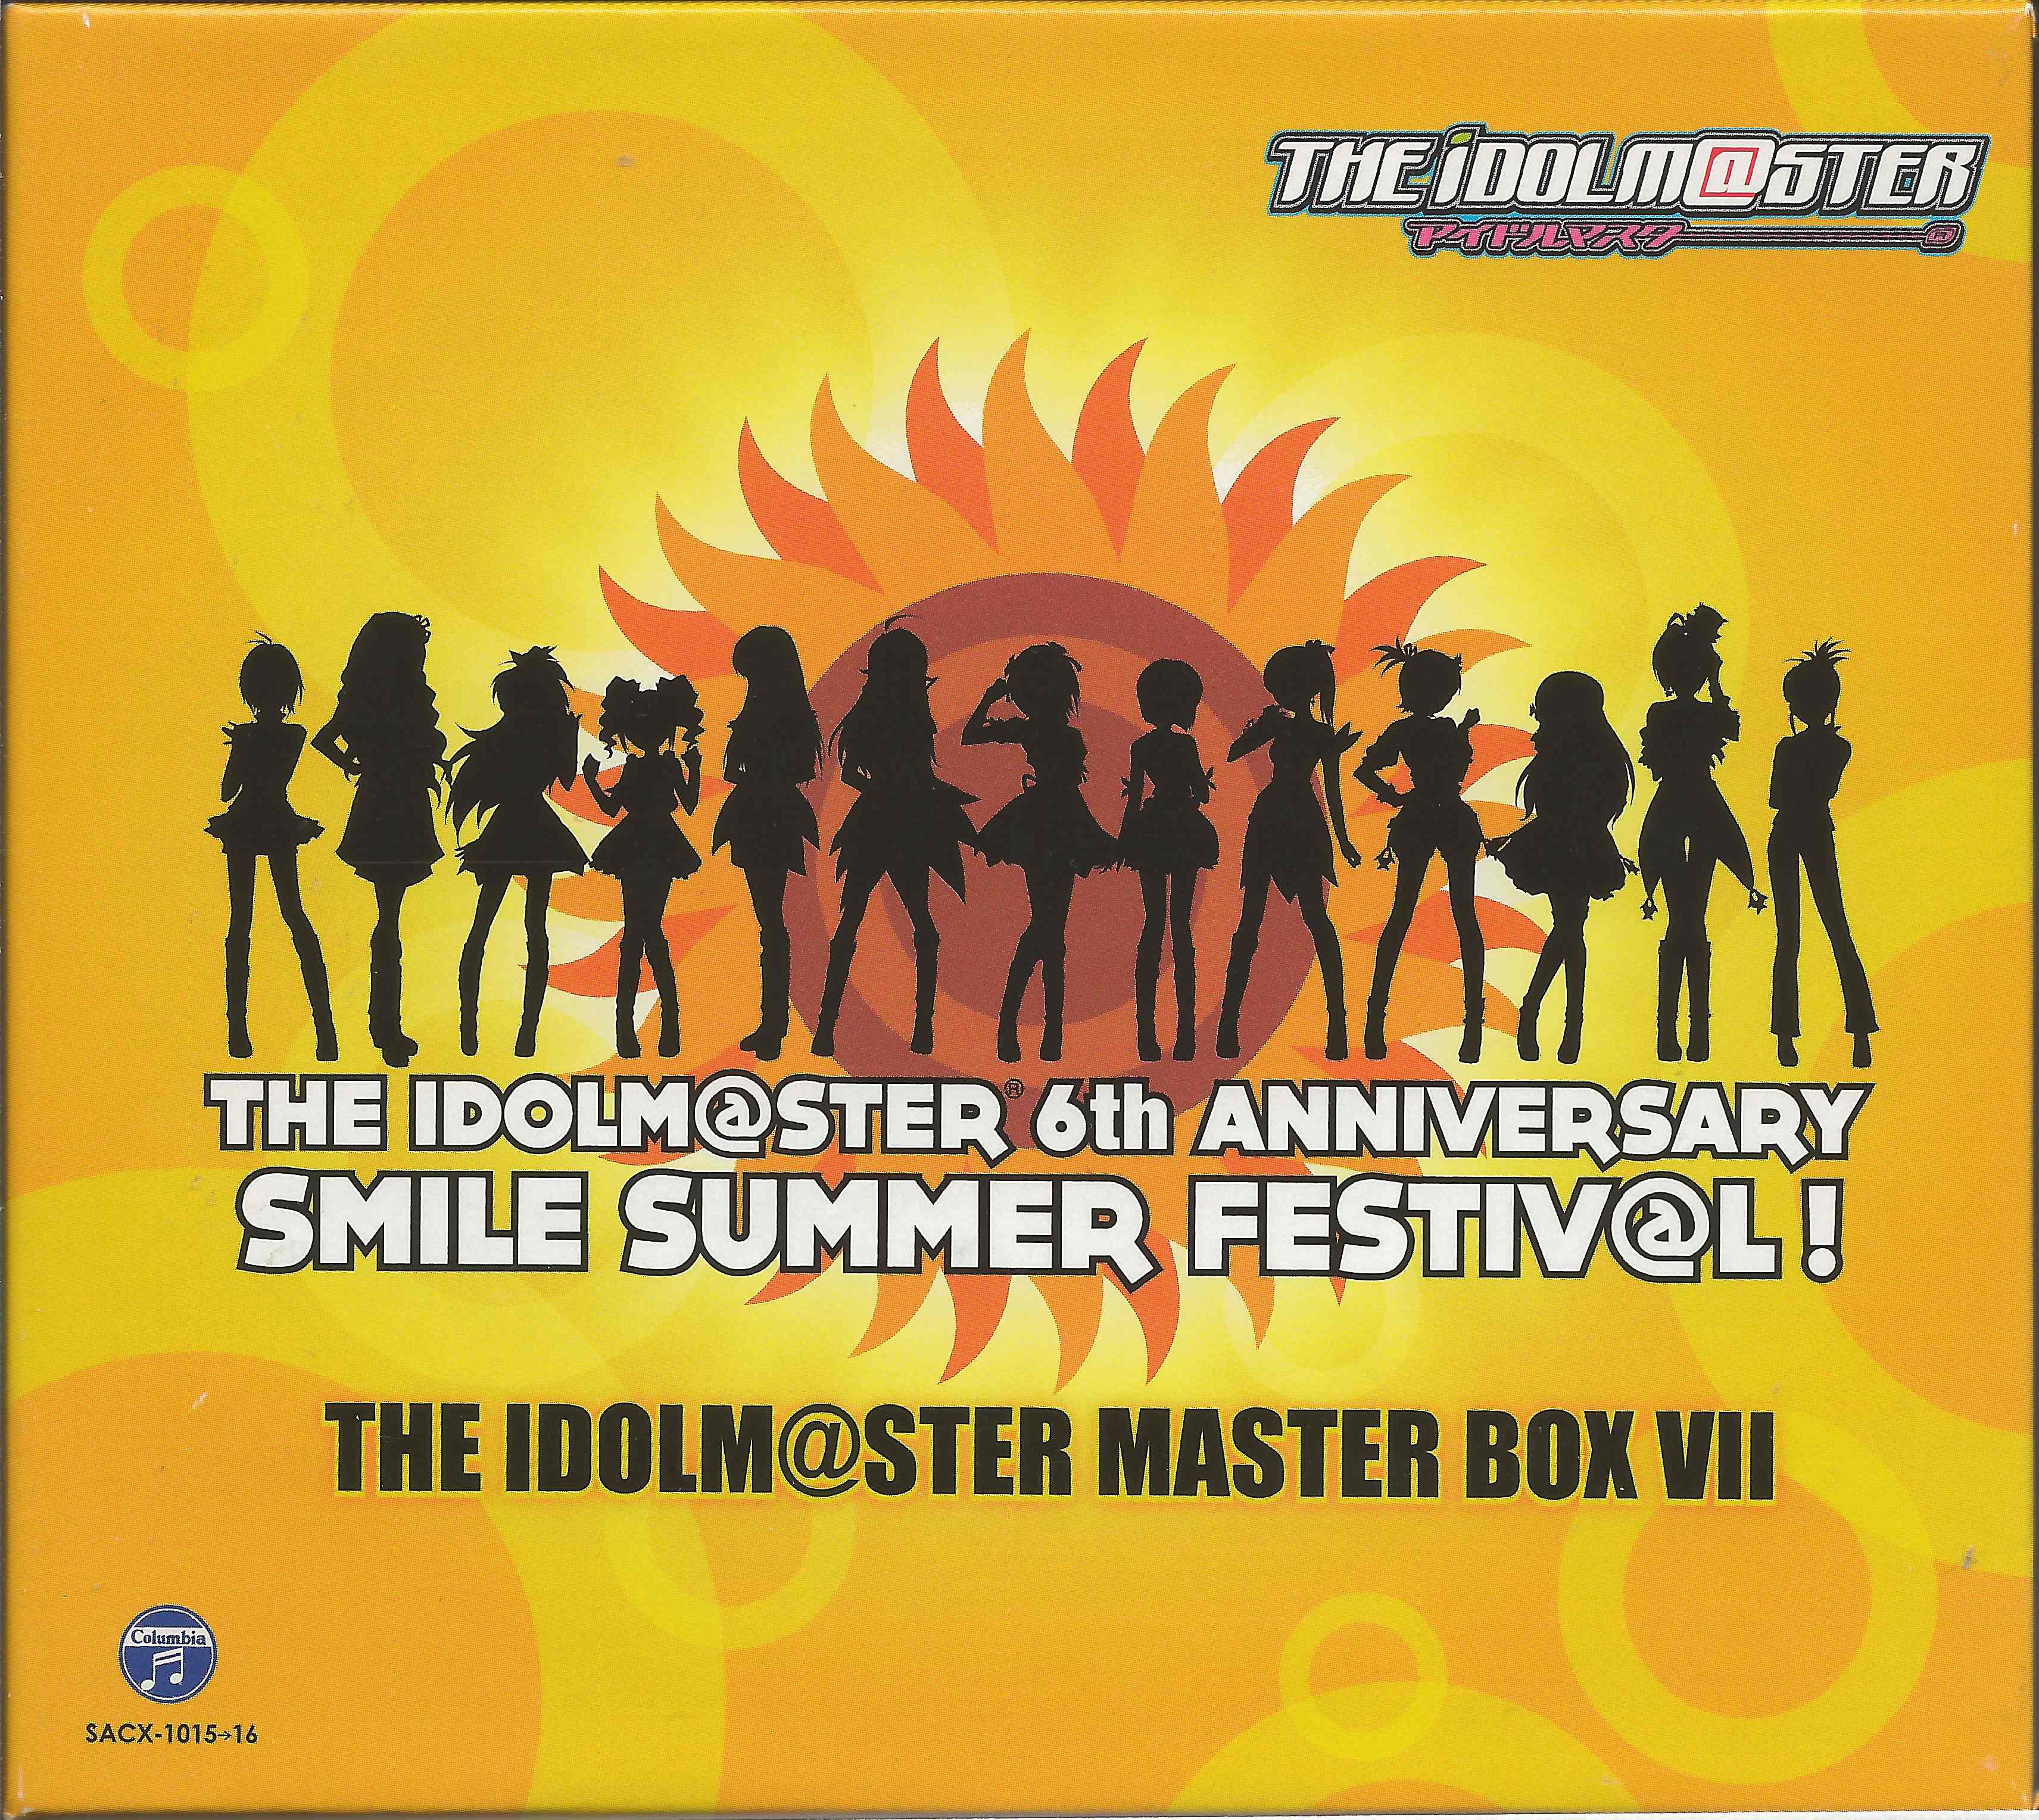 Release “THE IDOLM@STER MASTER BOX VII” by 765PRO ALLSTARS - MusicBrainz